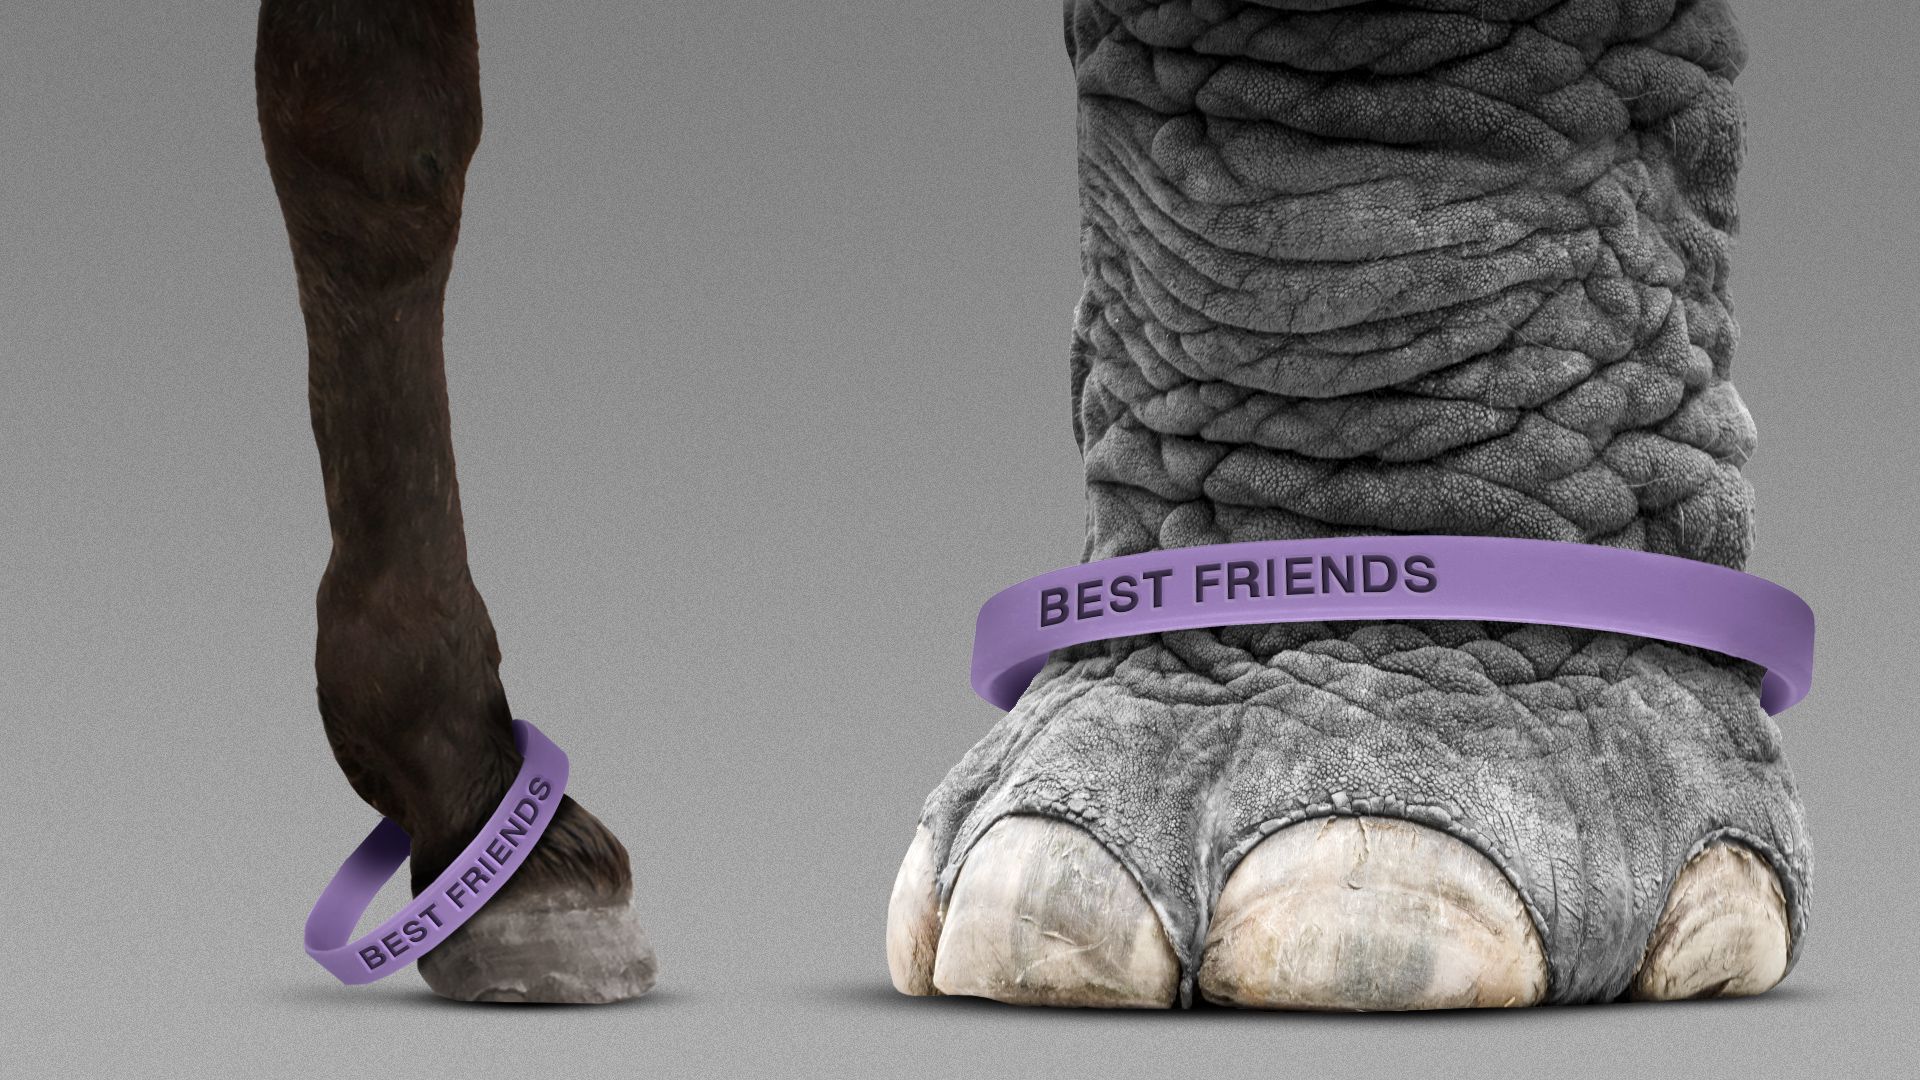 Illustration of a donkey leg and elephant leg wearing "Best Friend" bracelets. 